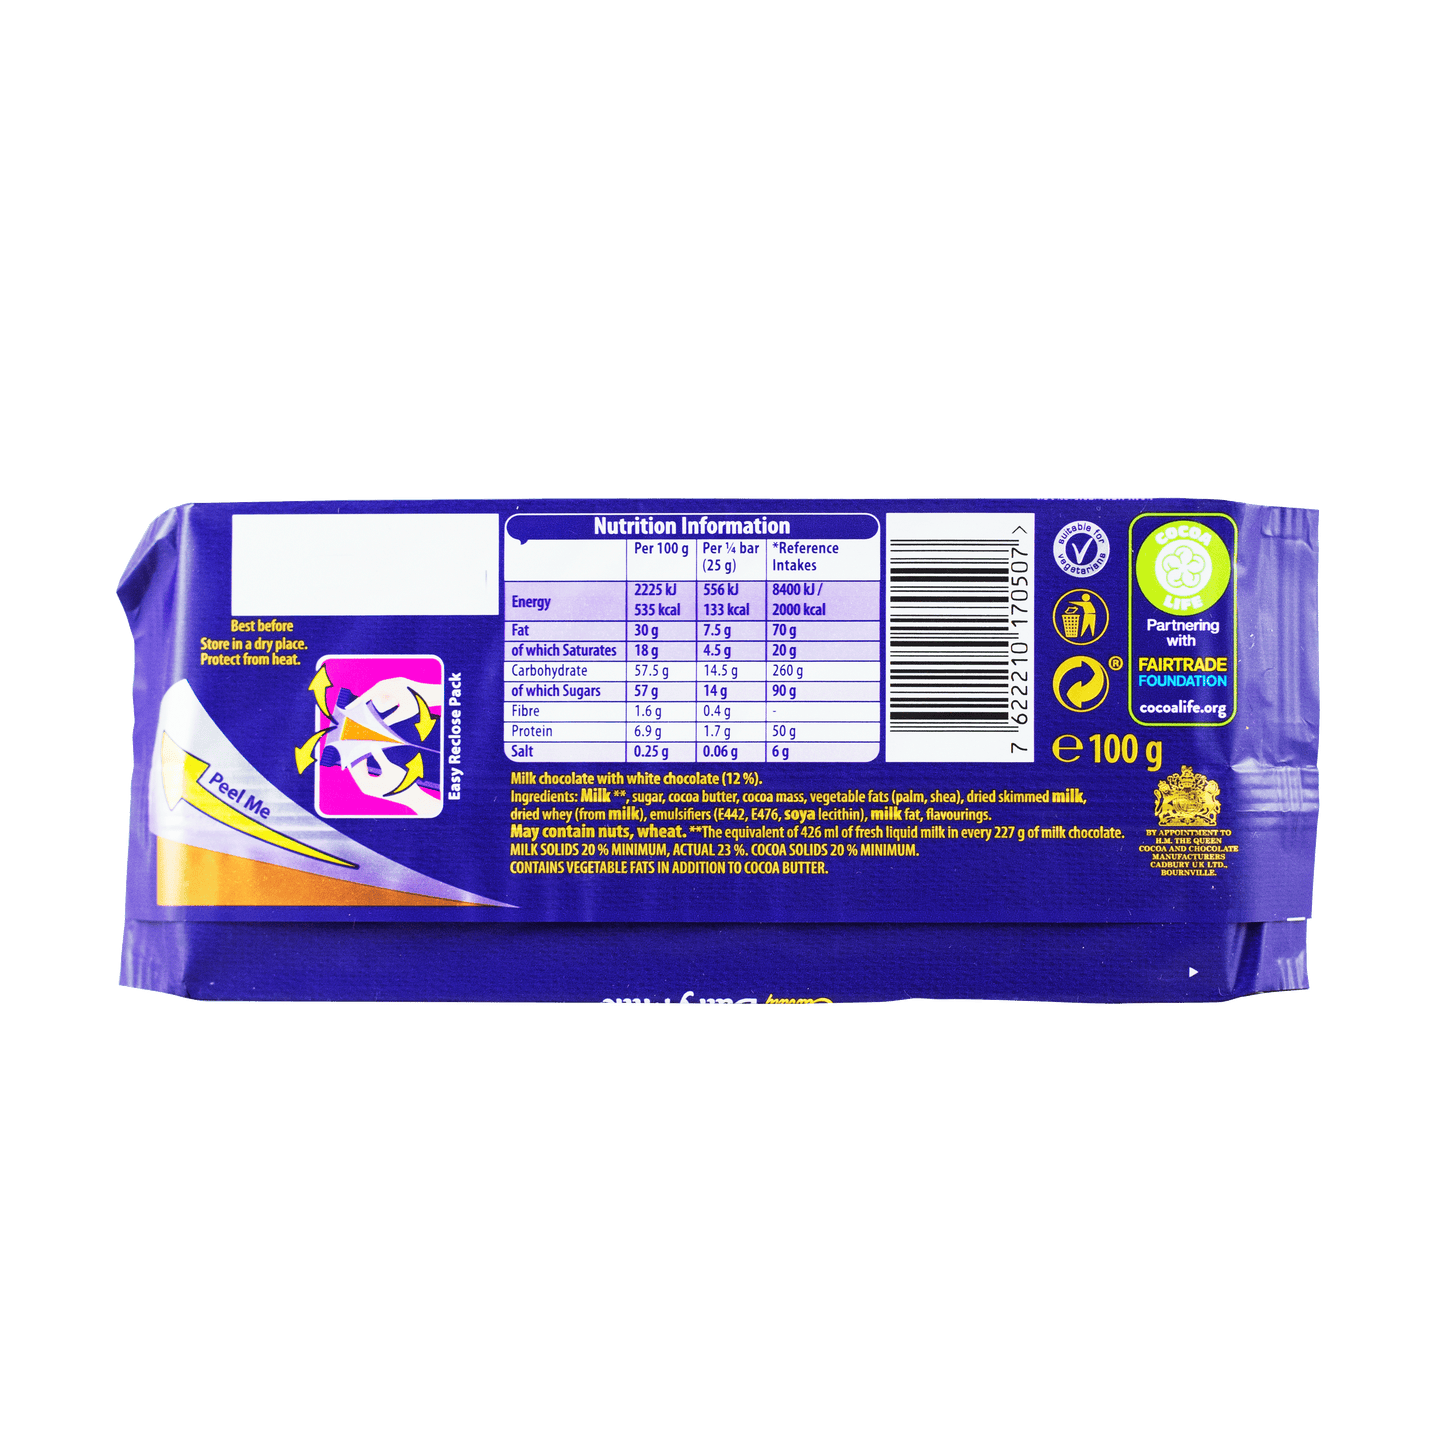 Cadbury Dairy Milk Winter Wonderland Edition 100g